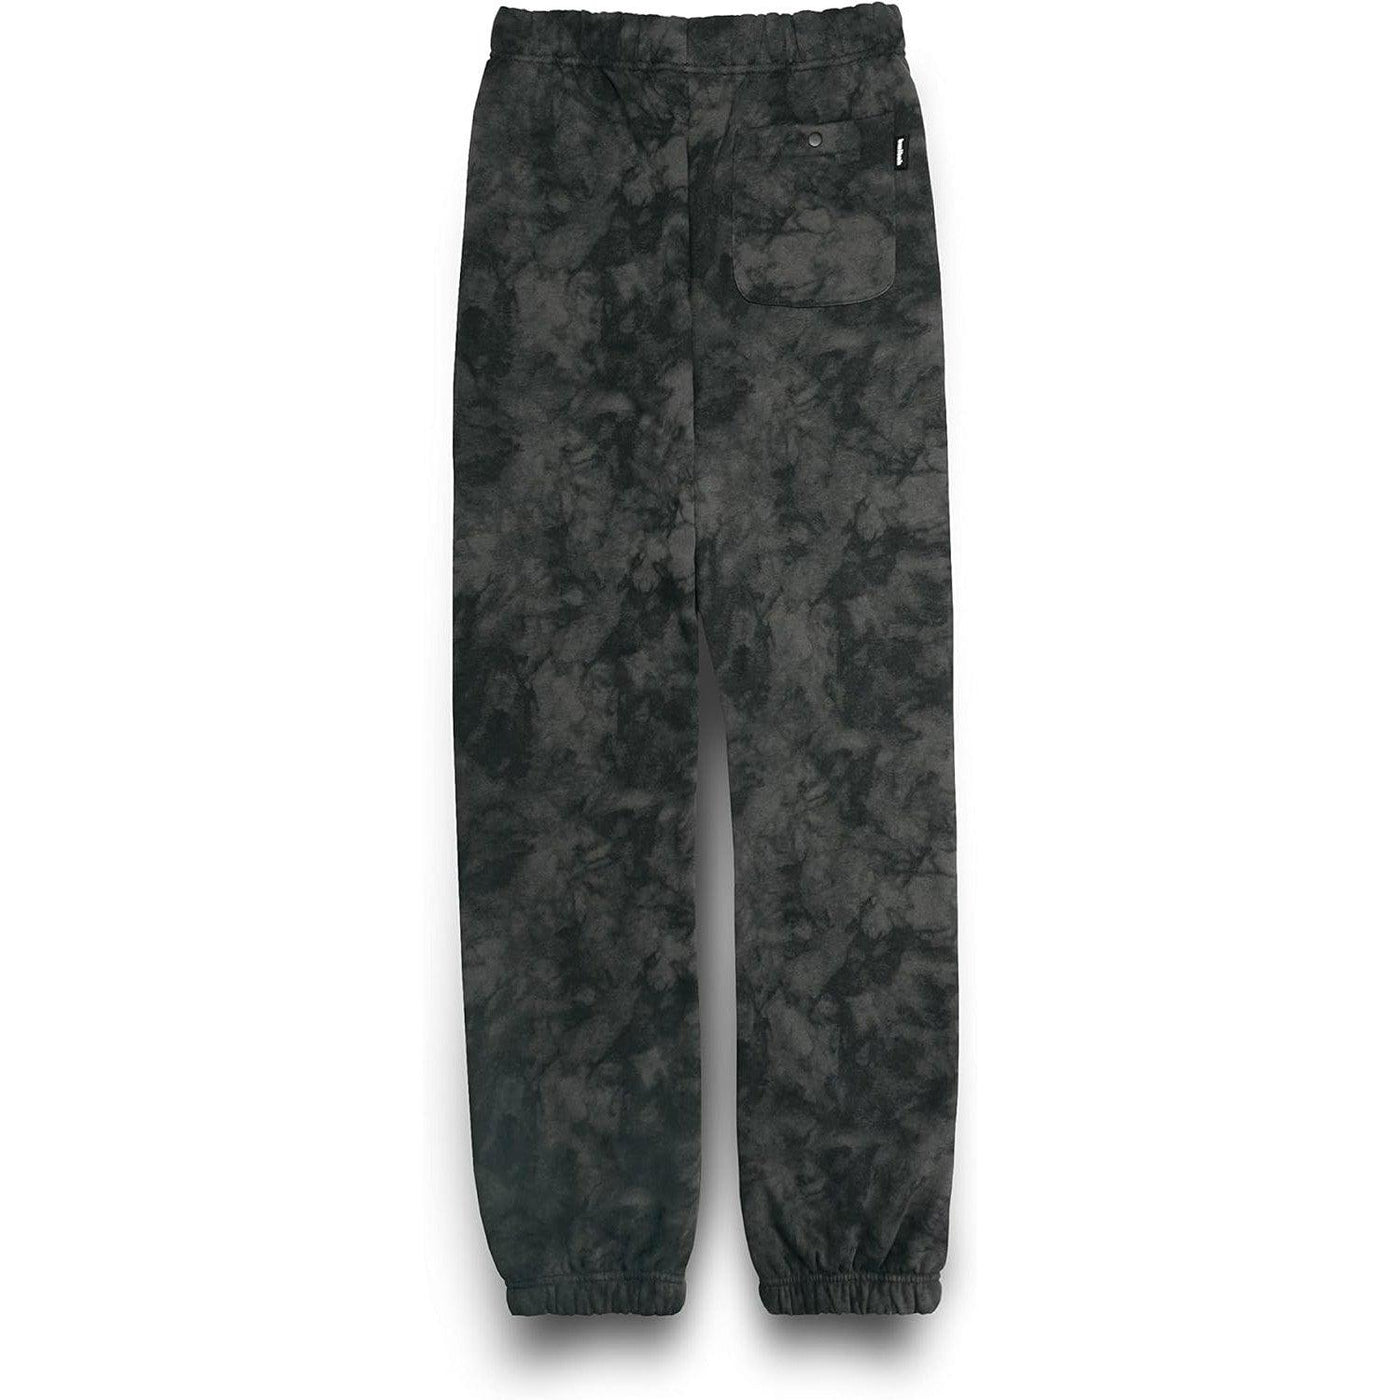 Twitch Jogger Sweatpants Black Wash Trousers With Pockets Pants - Massive Discounts